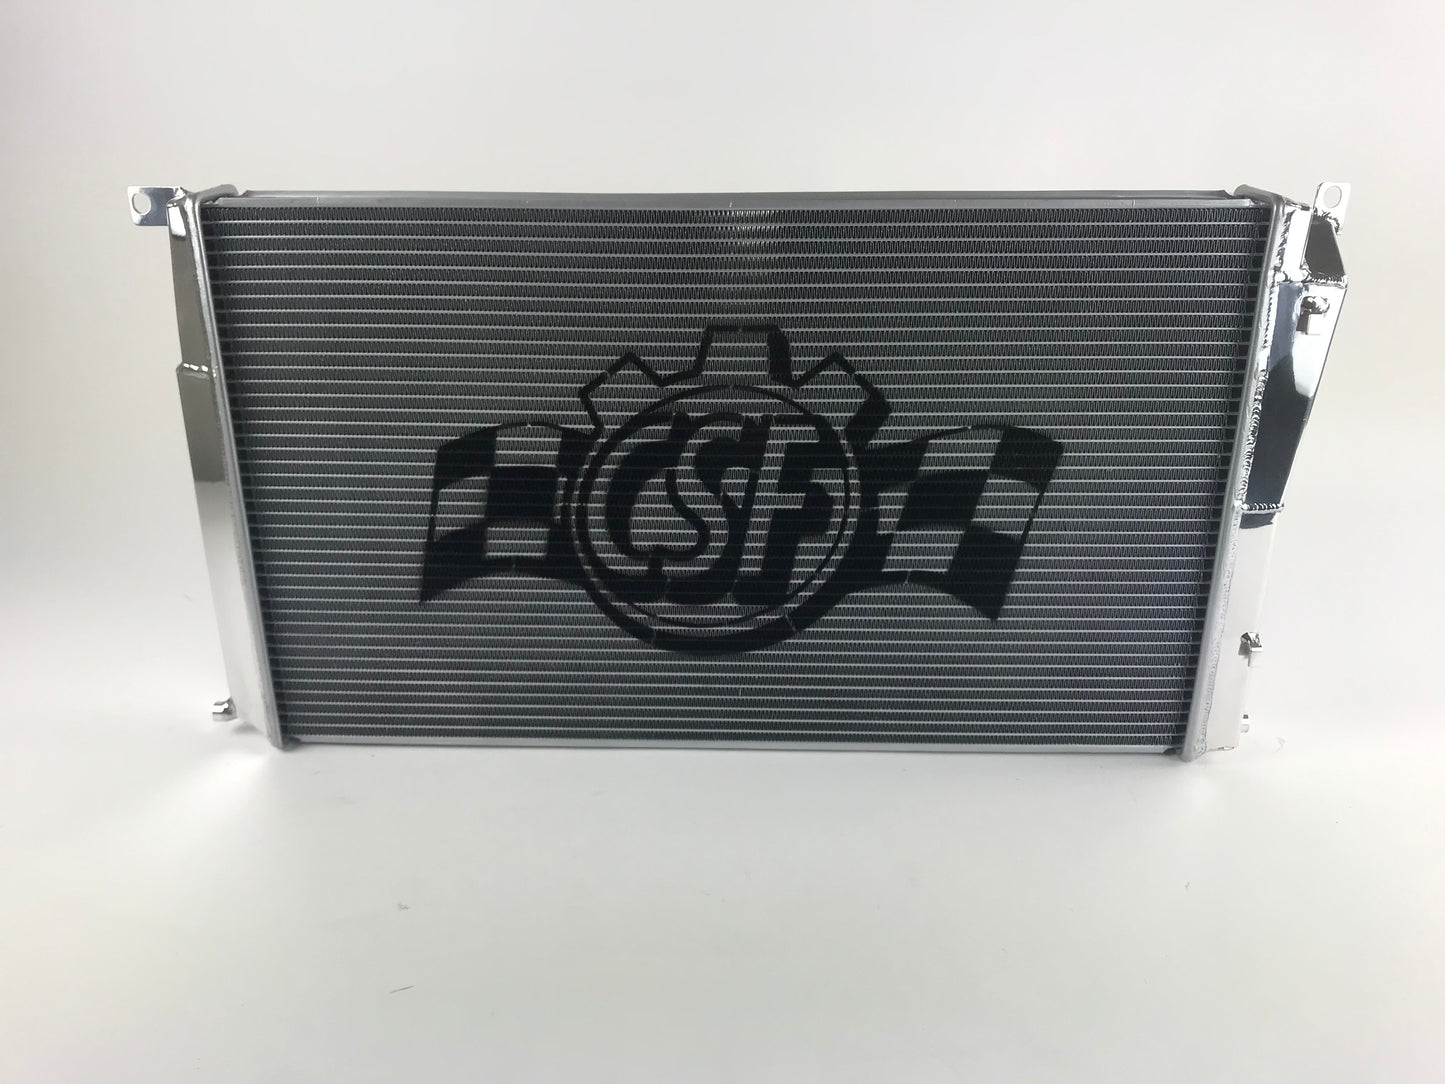 CSF High Performance Radiator for N20 (Manual Transmission)